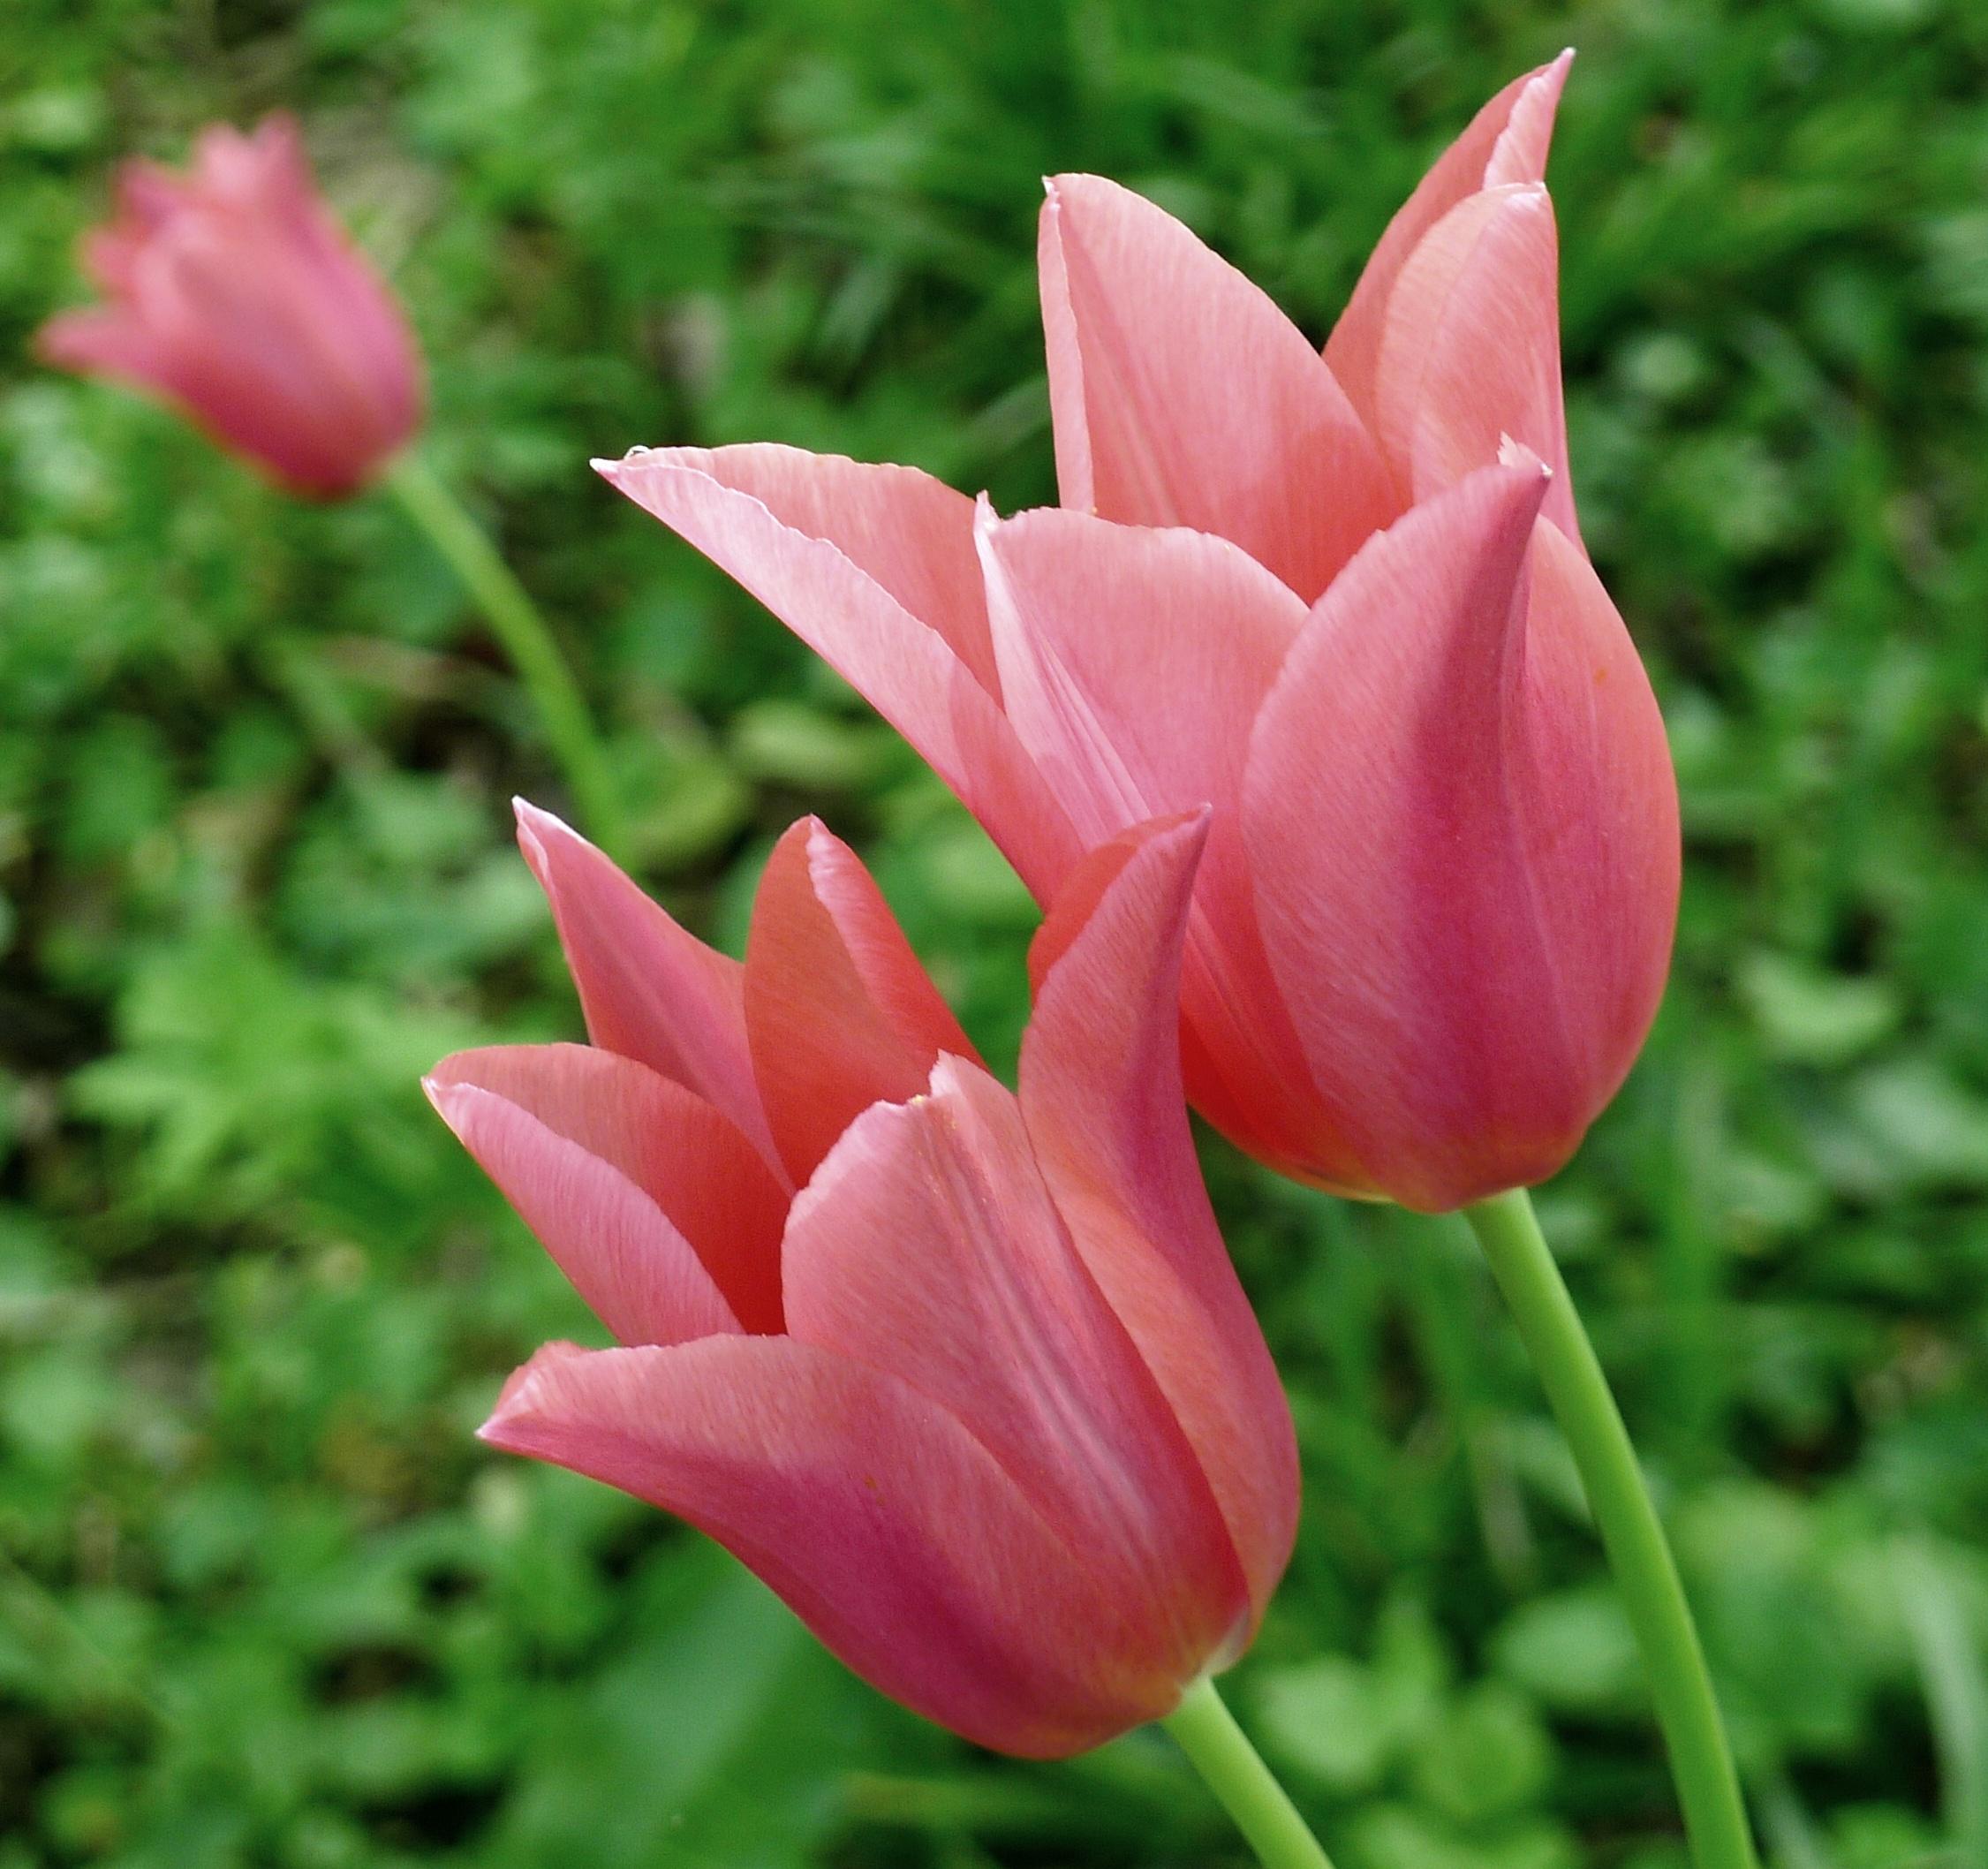 Tulip Bunchflowering 'Toronto' - Tulip from Leo Berbee Bulb Company